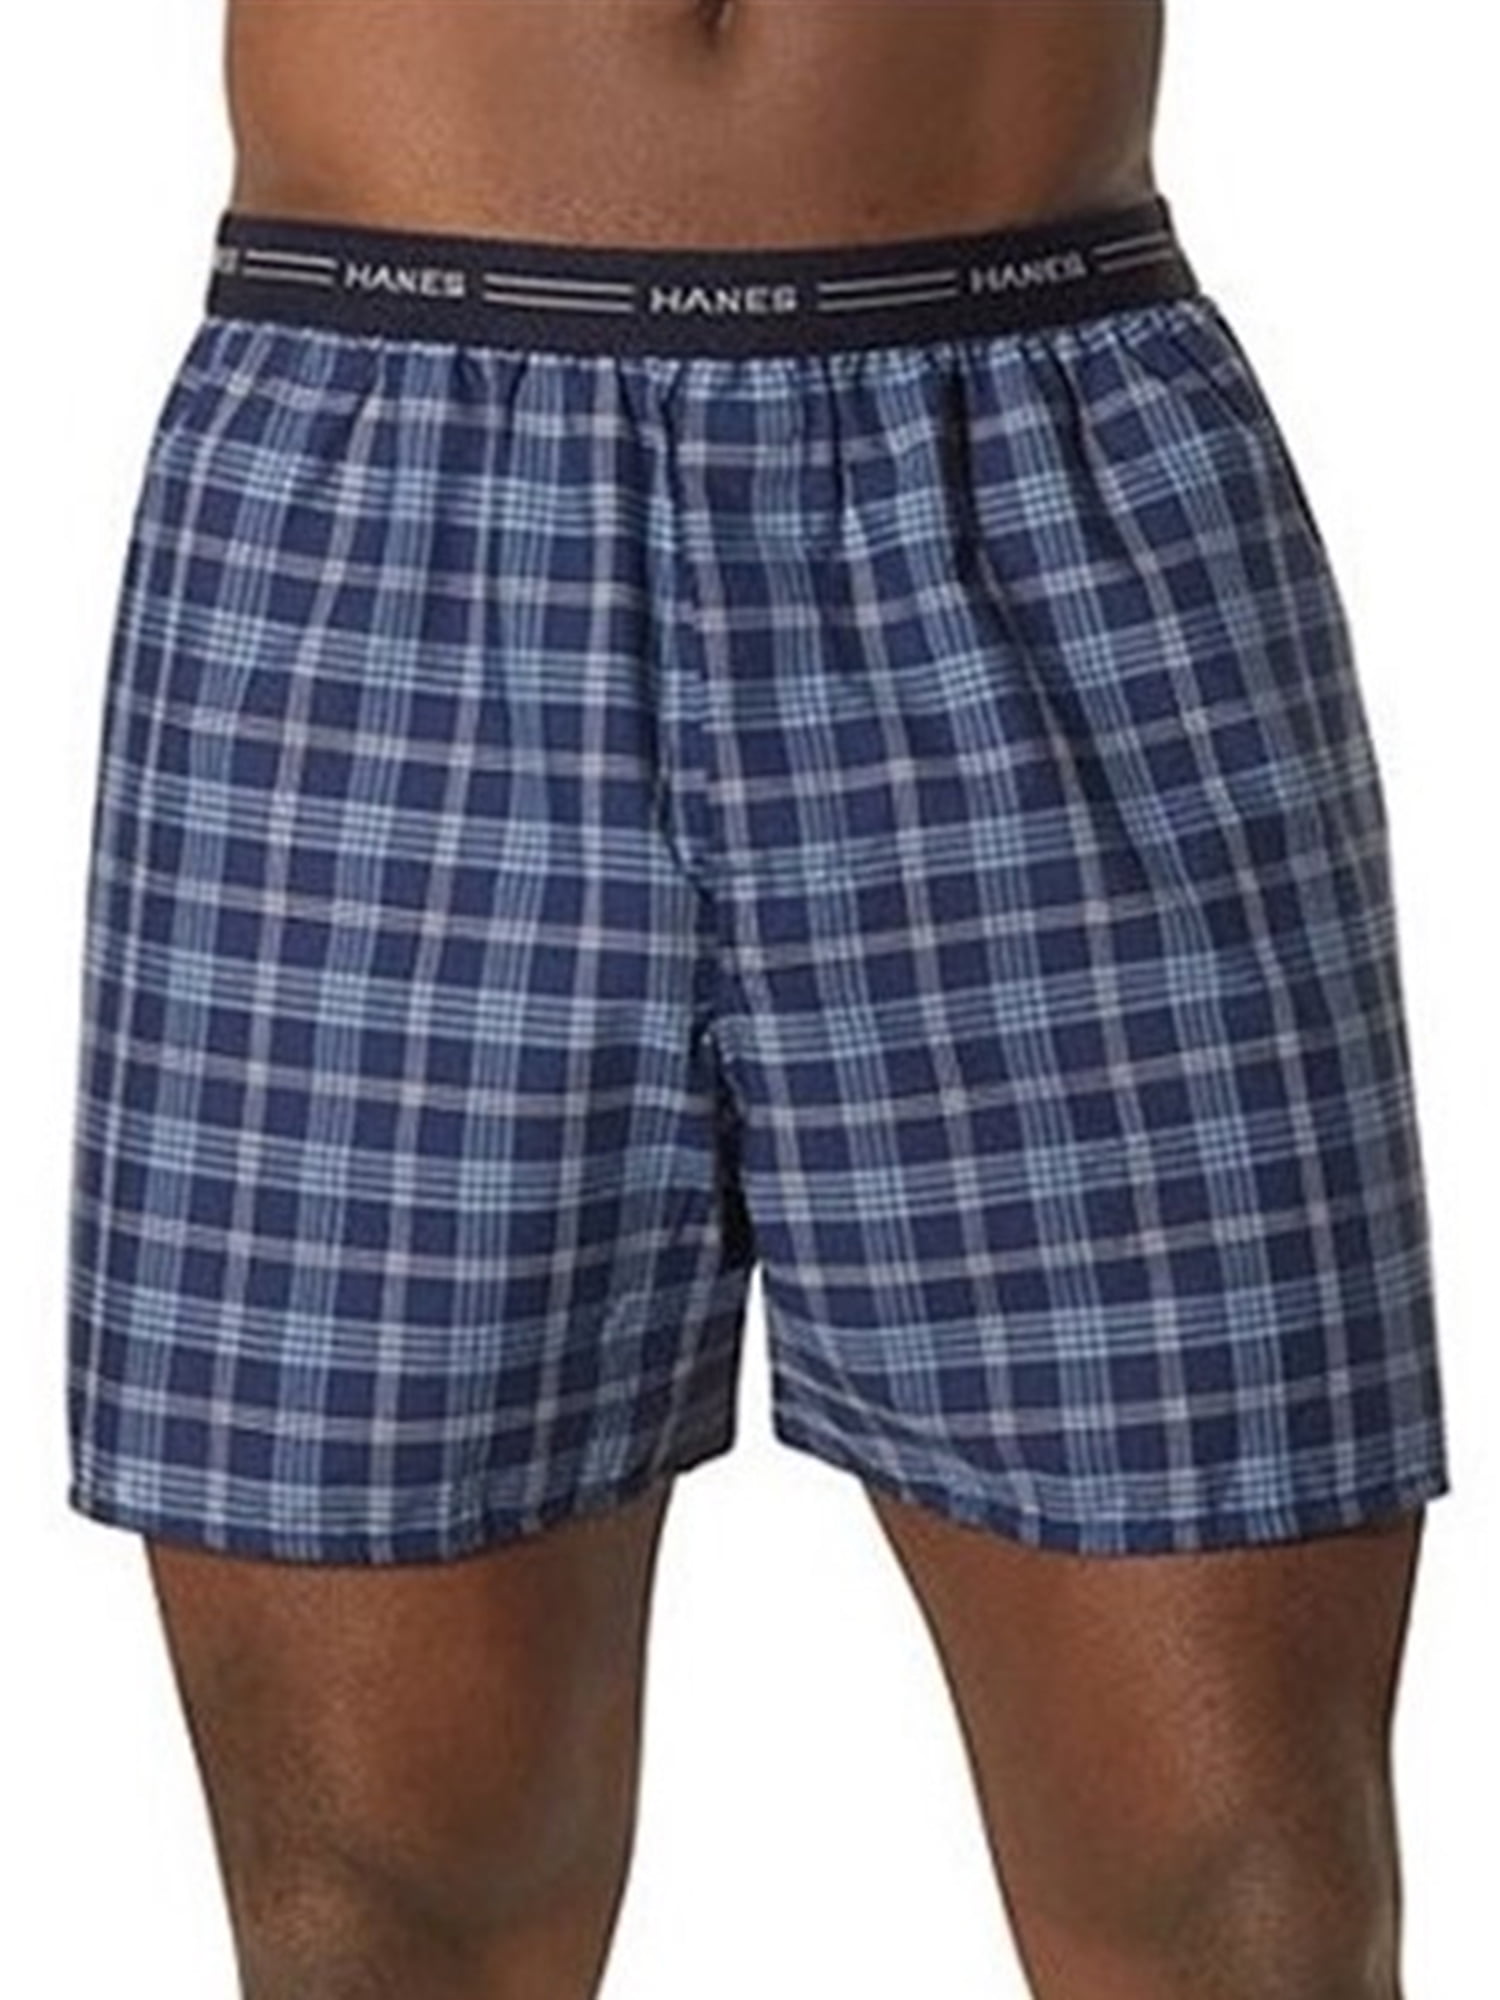 Hanes - Hanes Men's Comfort Flex Plaid Boxers with Exposed Waistband ,  5-Pack - Walmart.com - Walmart.com